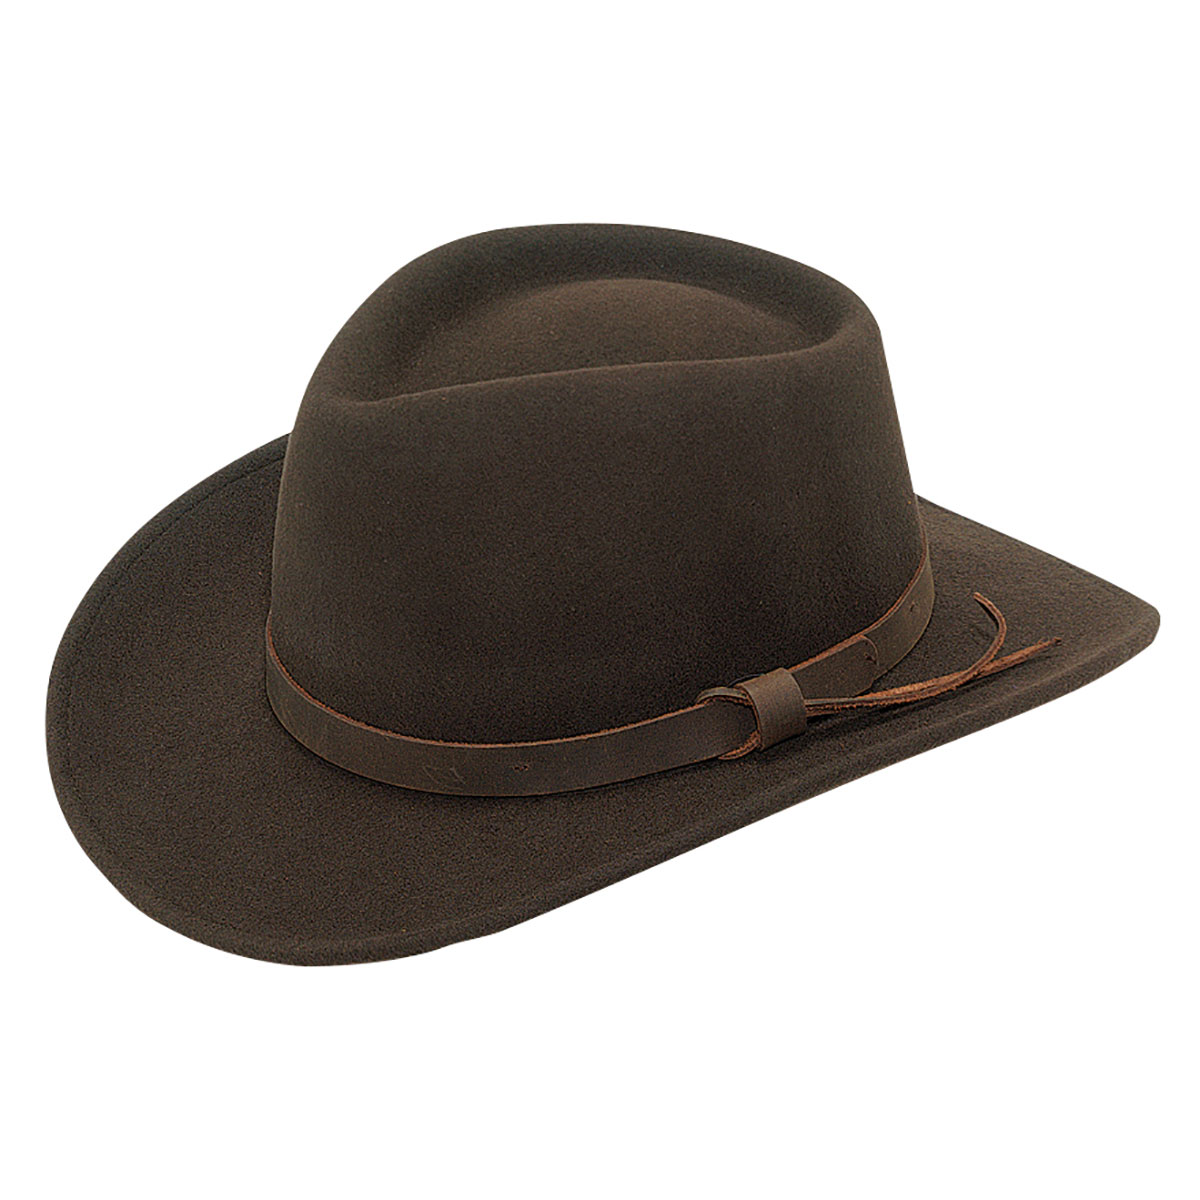 7211202-m Crushable Cowboy Hat - Brown - Medium